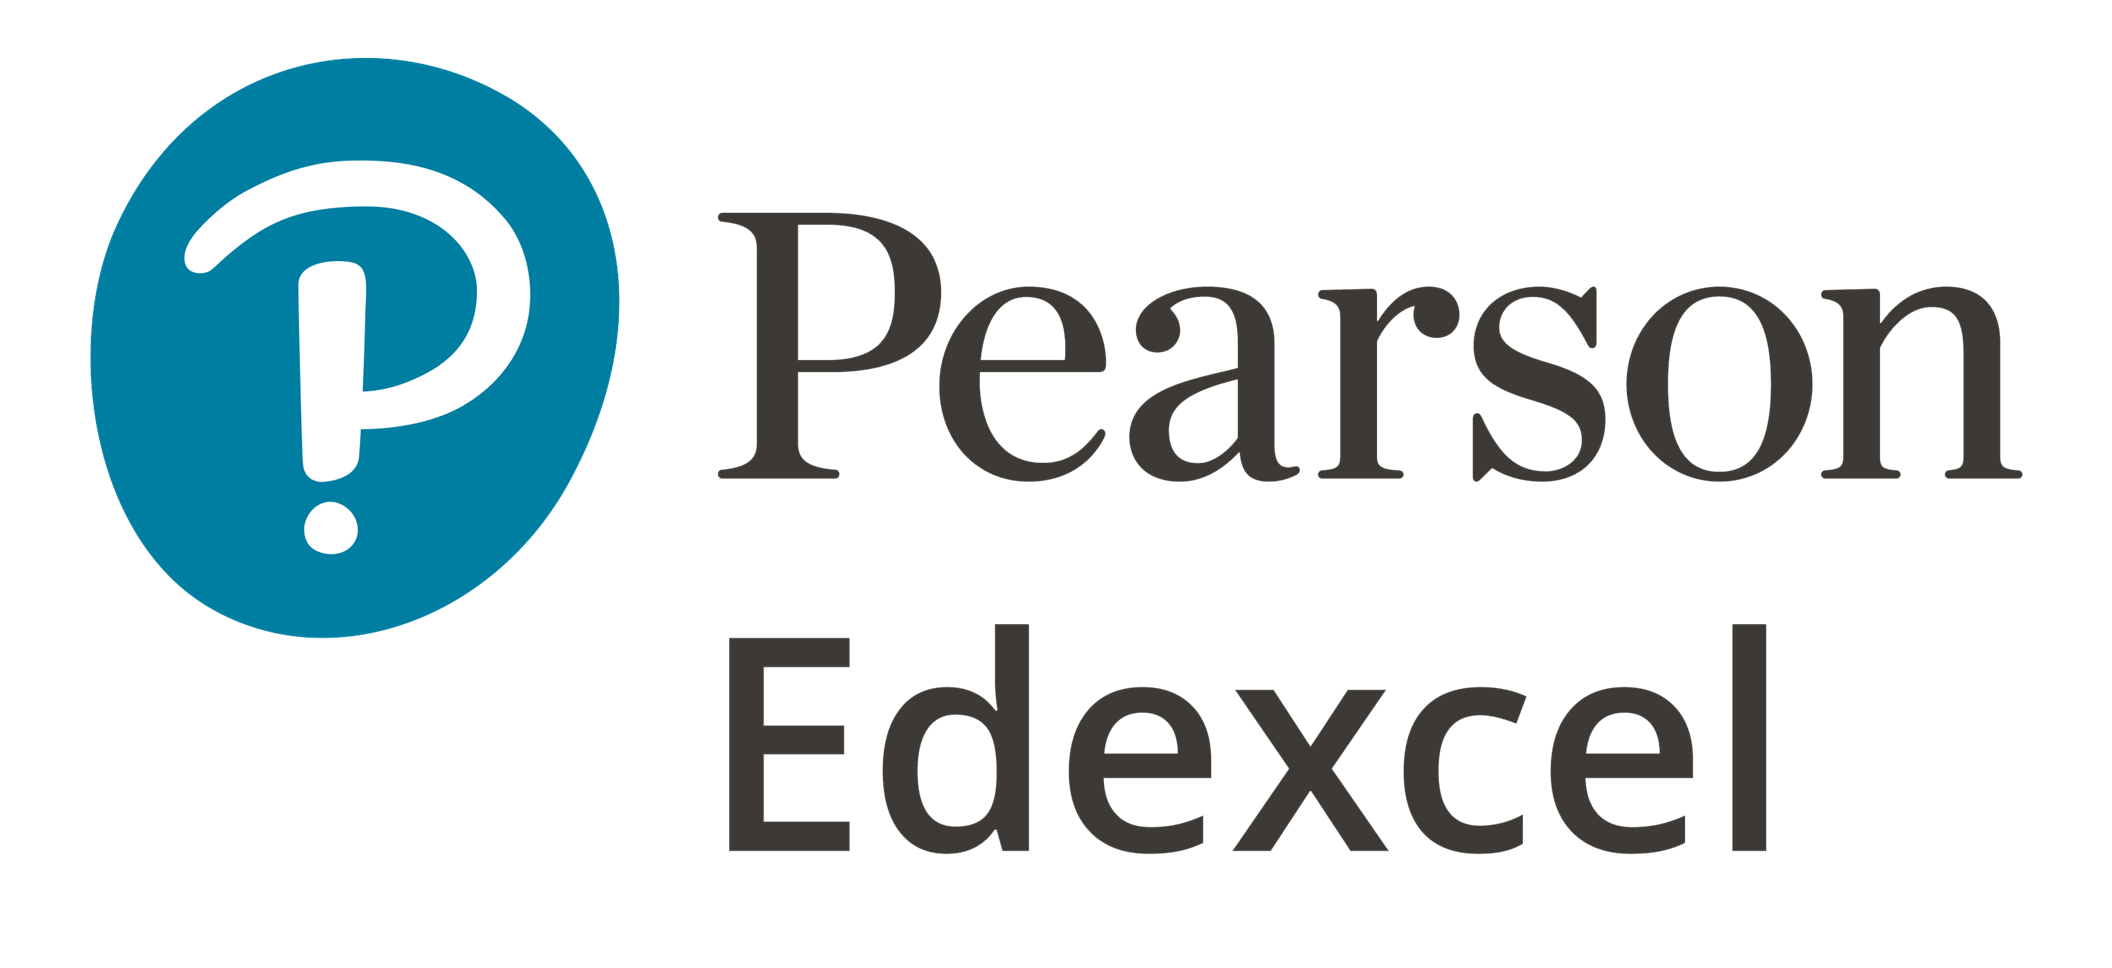 pearson-edx1